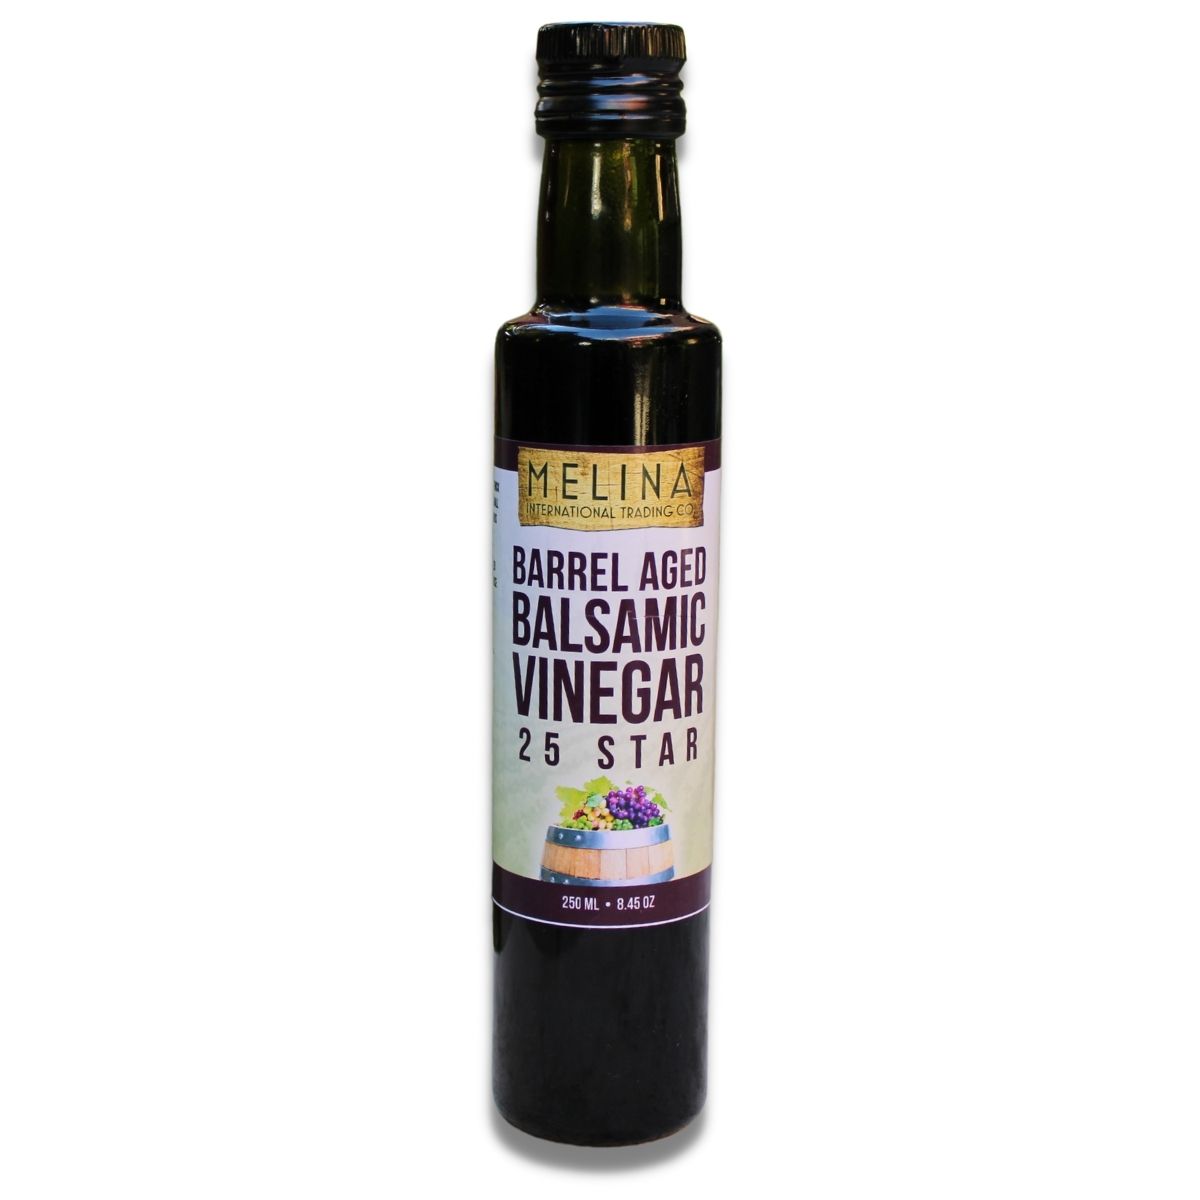 Melina International 25 Star Barrel Aged Balsamic Vinegar label